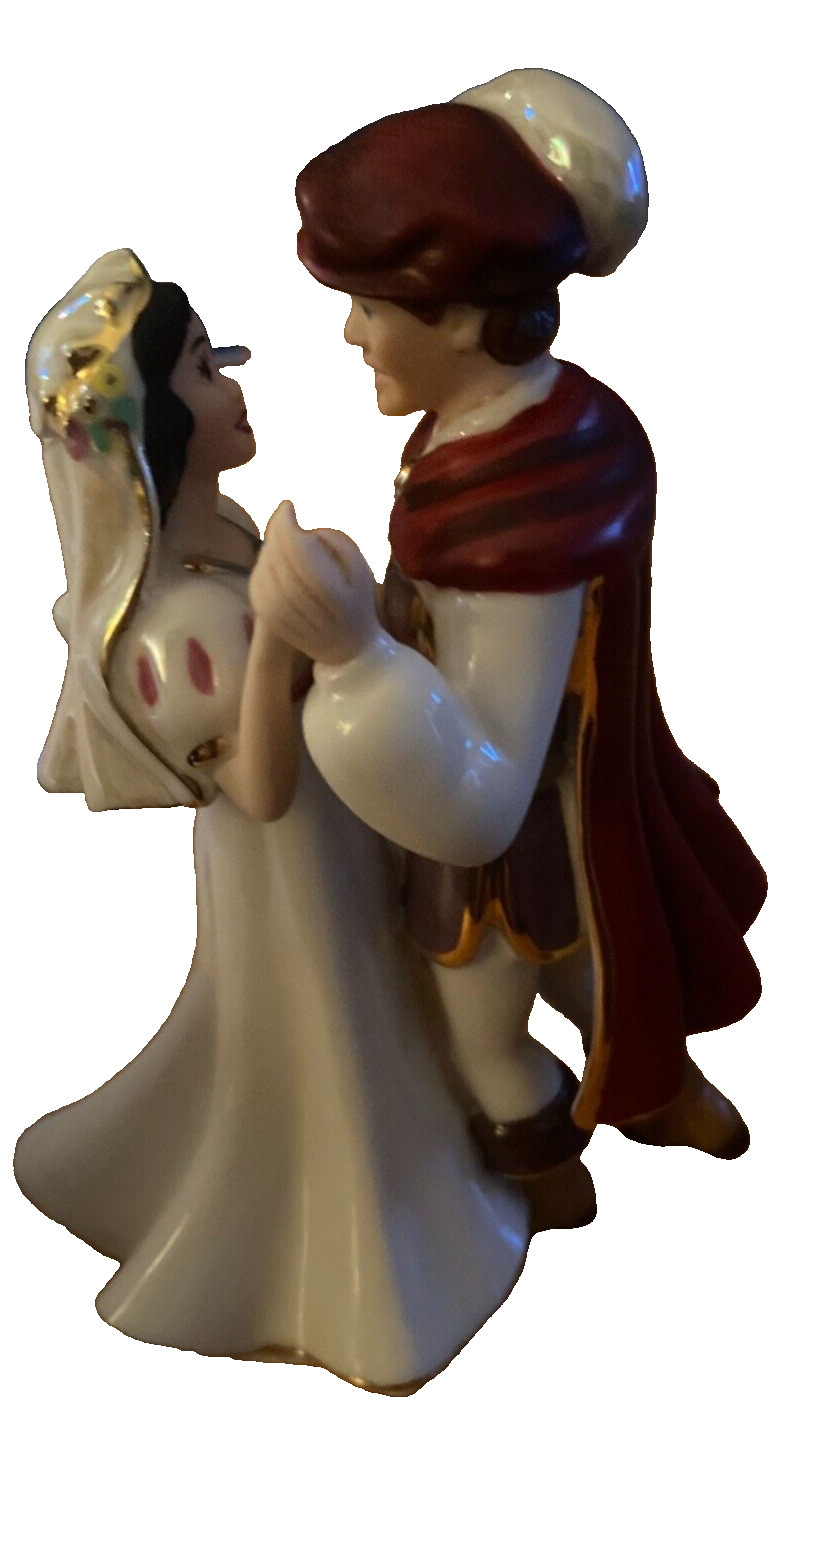 Lenox Disney Snow White and Prince Waltzing Figurine 6